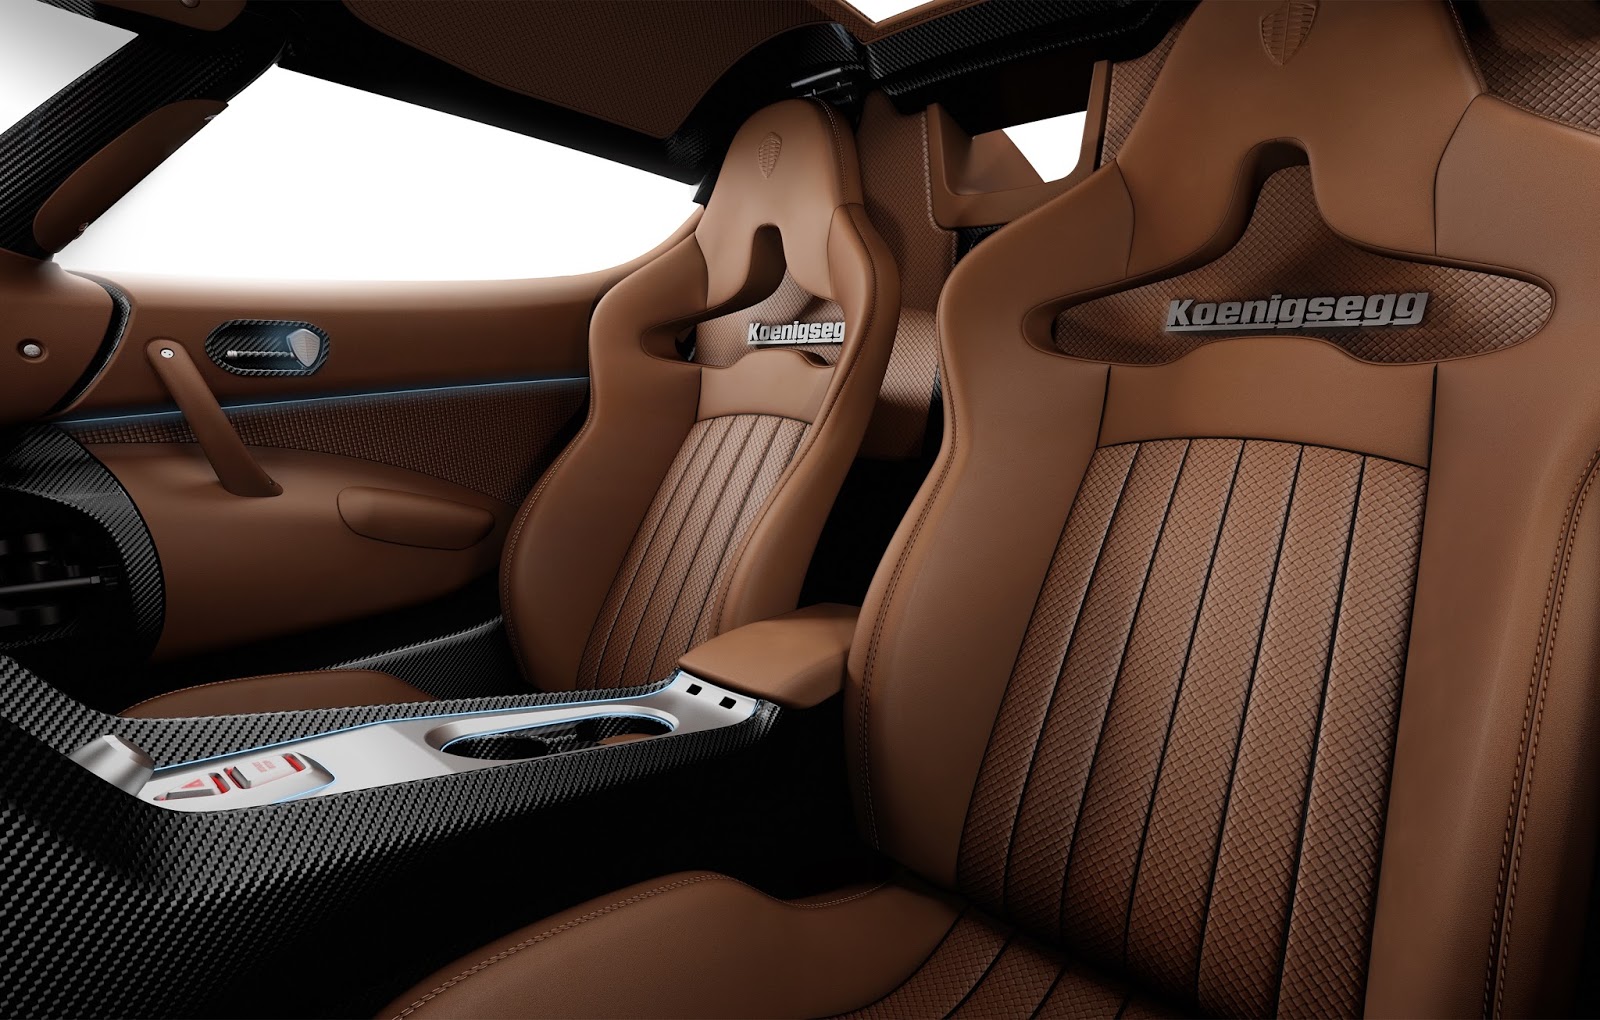 Koenigsegg Regera interior seat Υποκλιθείτε μπροστά στον καινούργιο βασιλιά